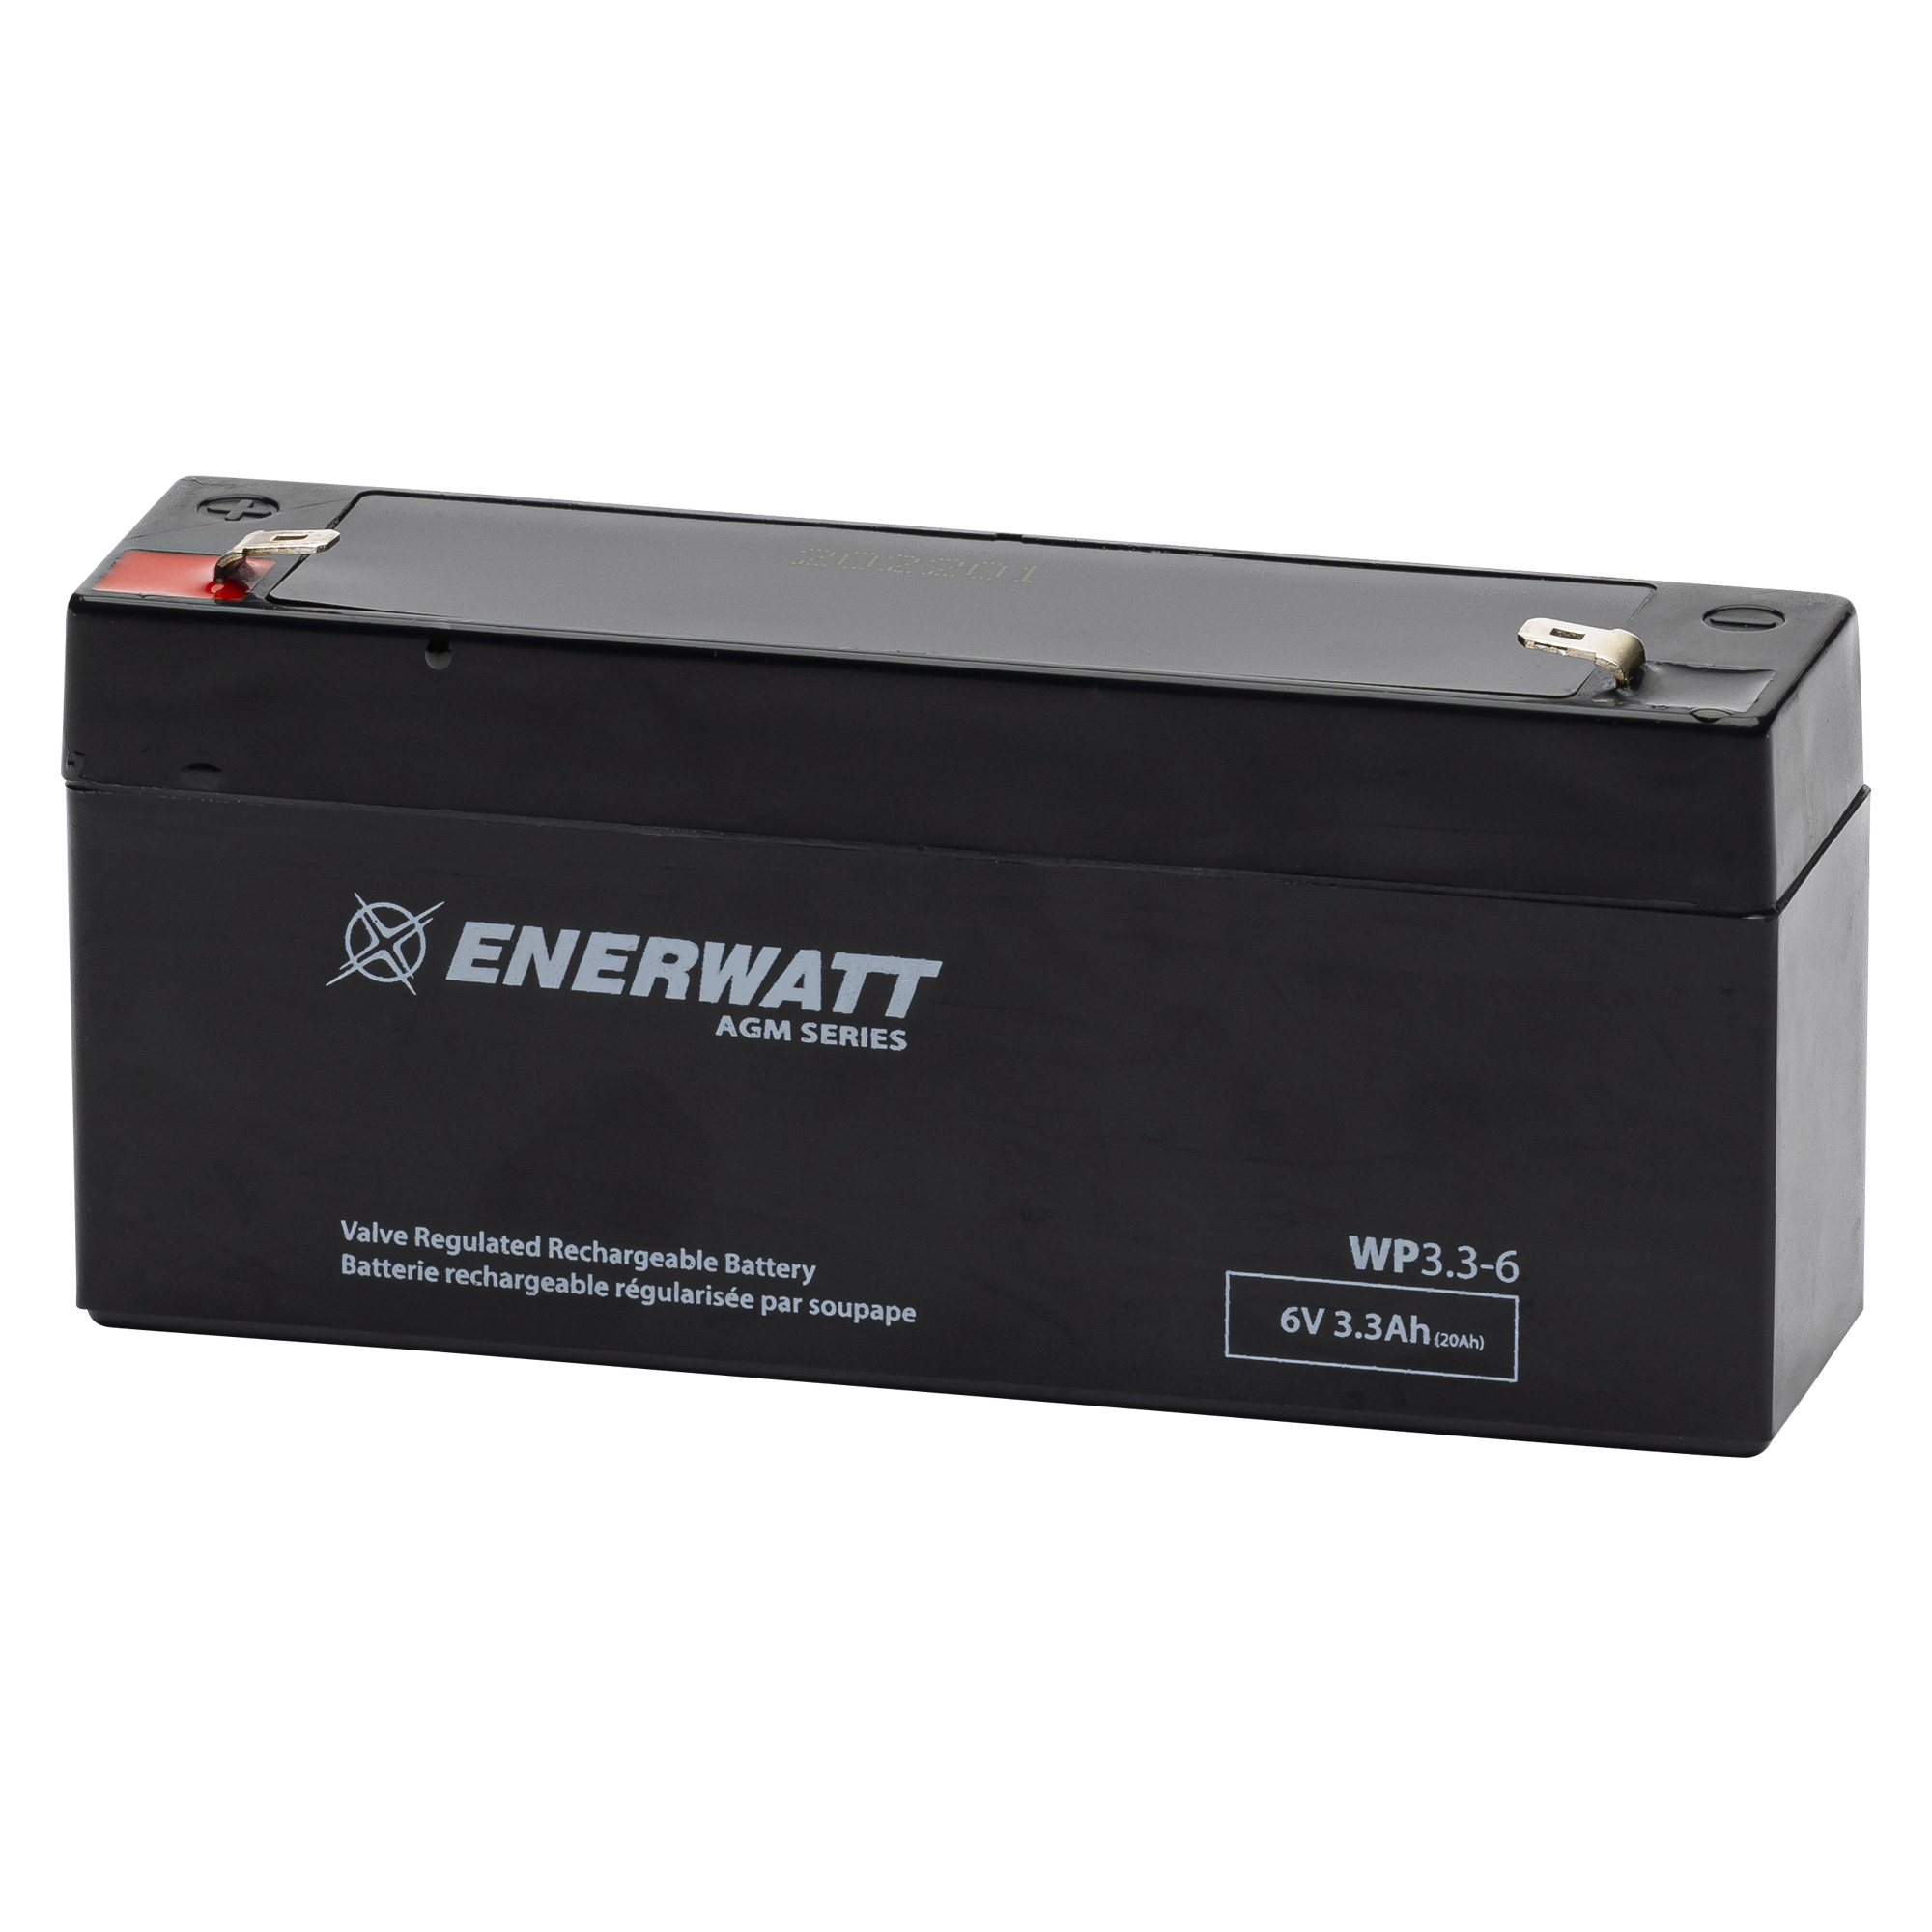 Batterie rechargeable 6V | 1.3Ah AH